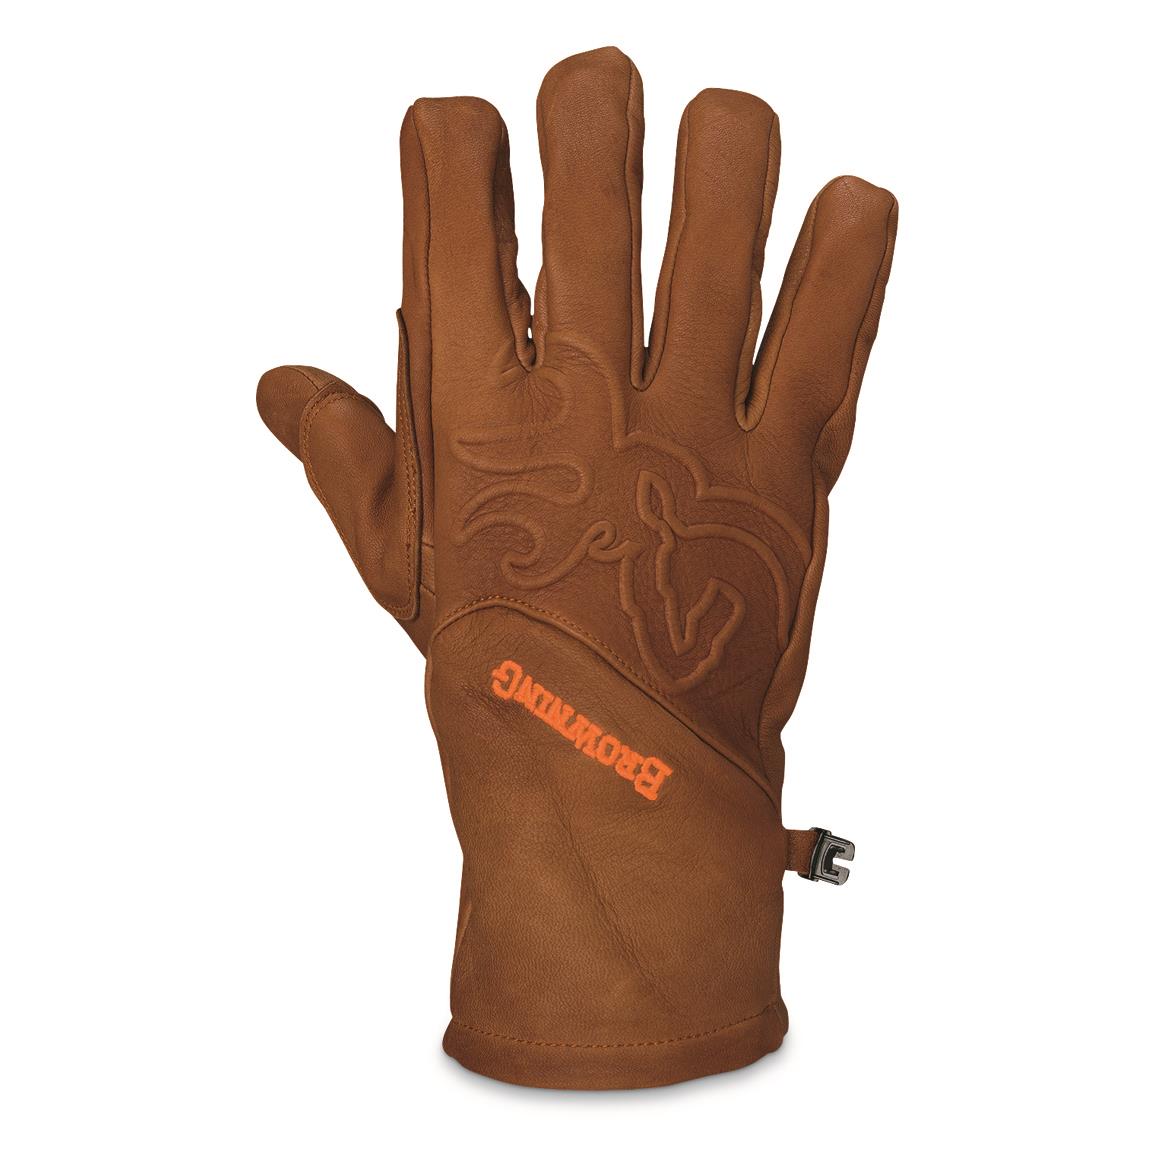 Browning Upland Hunting Shooter's Gloves, Tan